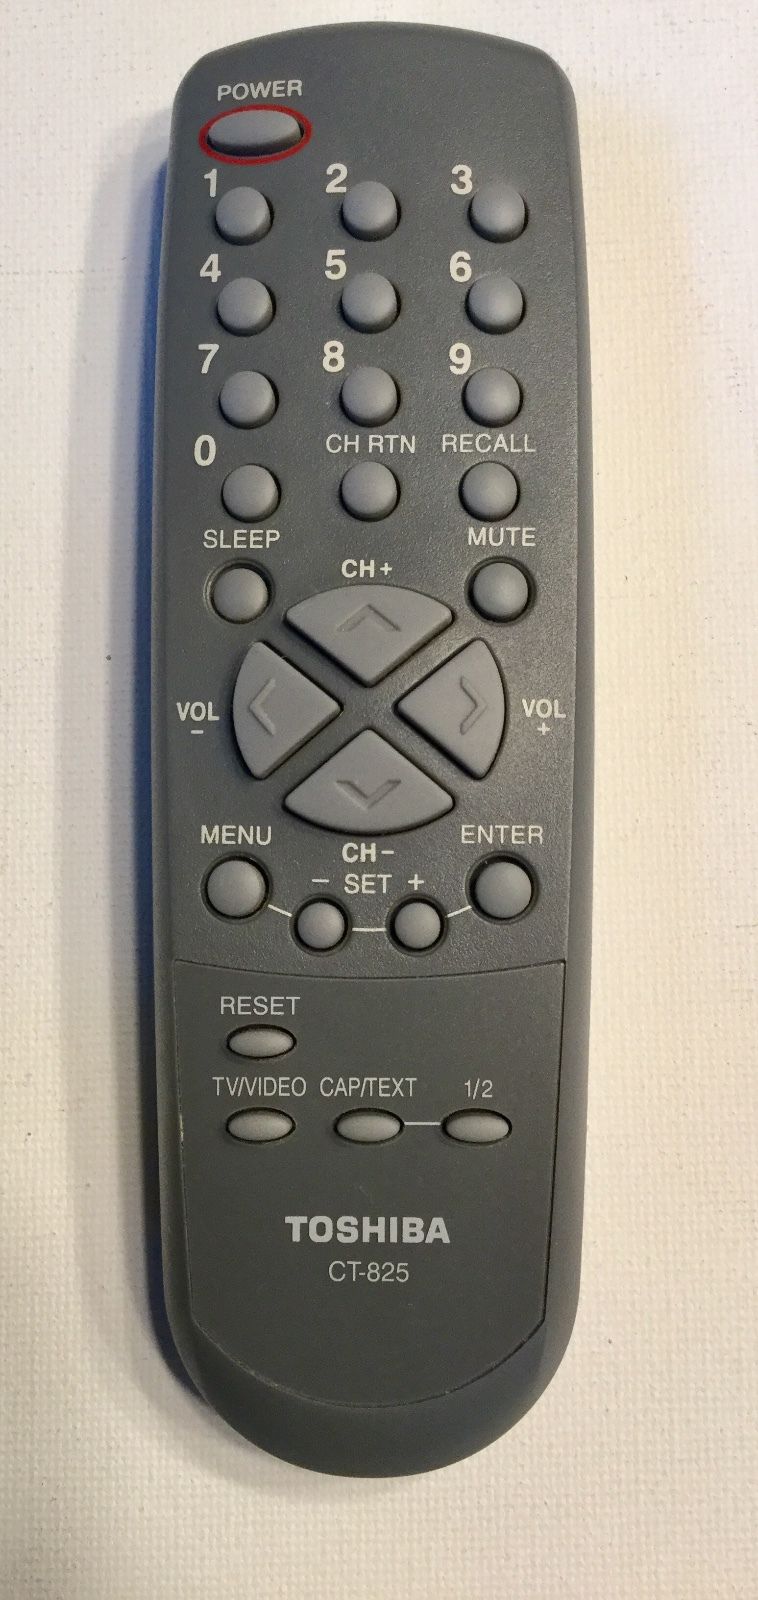 CT-825 Toshiba TV Remote Control front